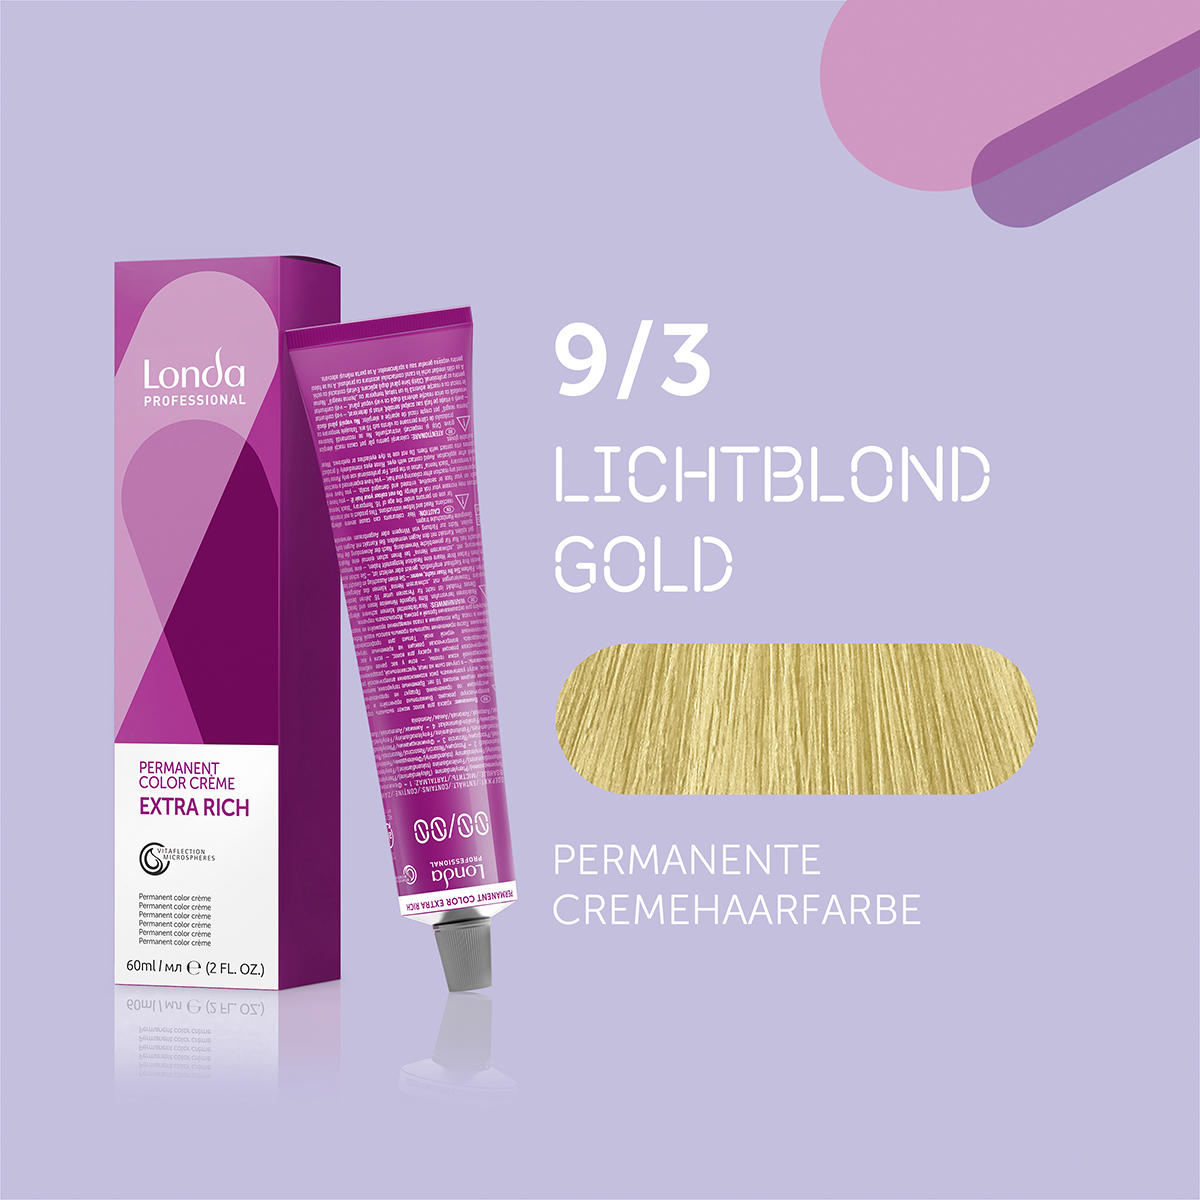 Londa Permanente Cremehaarfarbe Extra Rich 9/3 Lichtblond Gold, Tube 60 ml